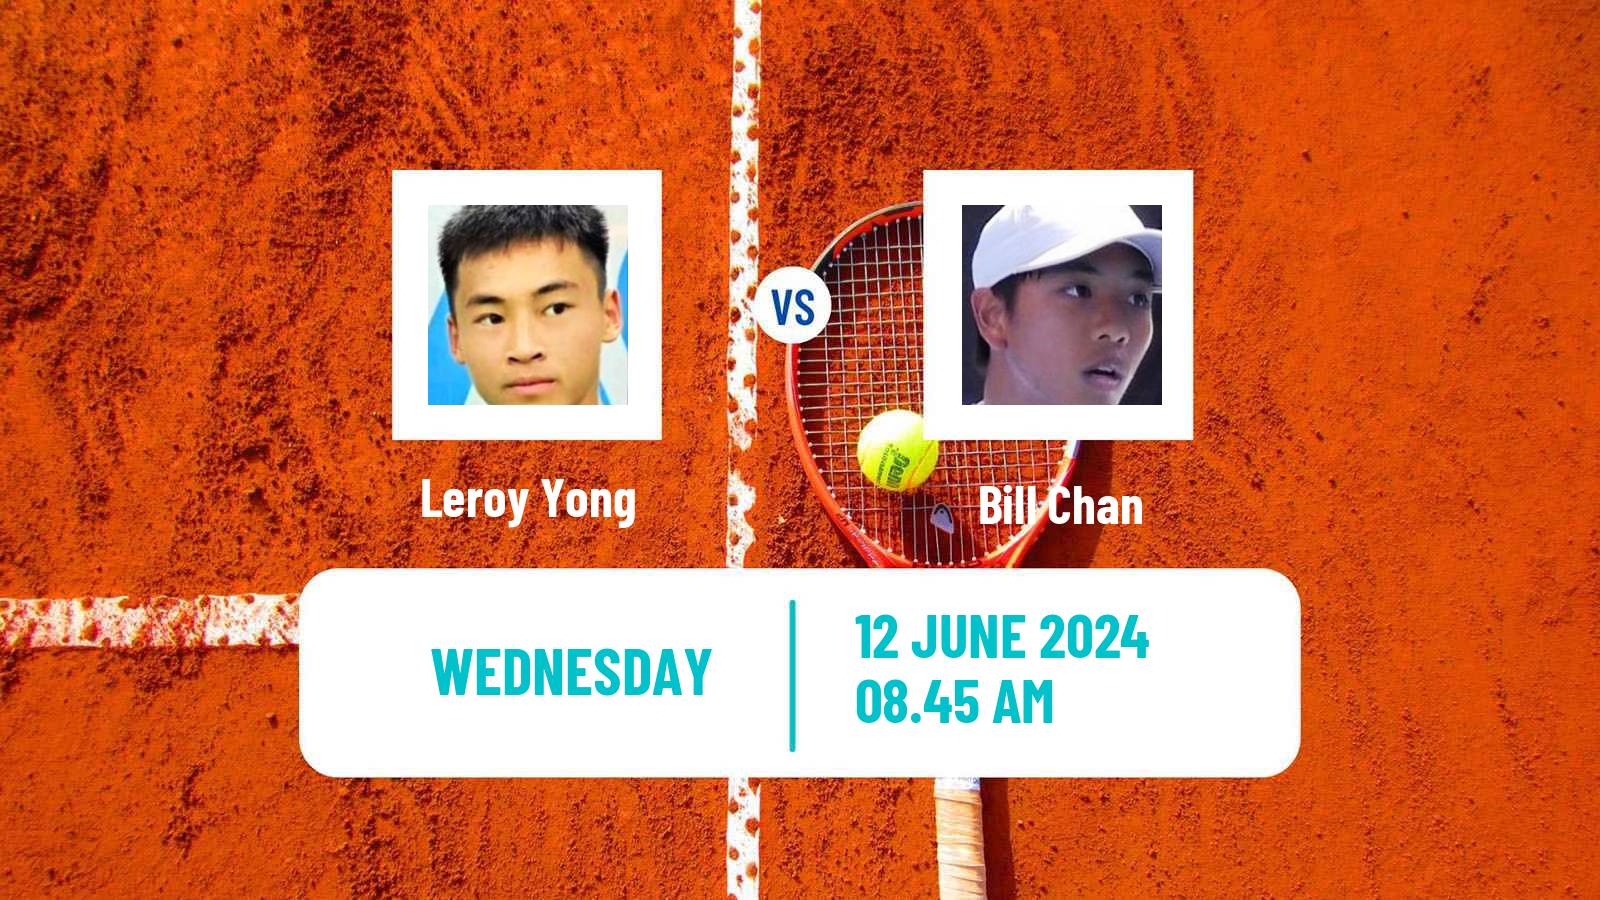 Tennis Davis Cup Group III Leroy Yong - Bill Chan